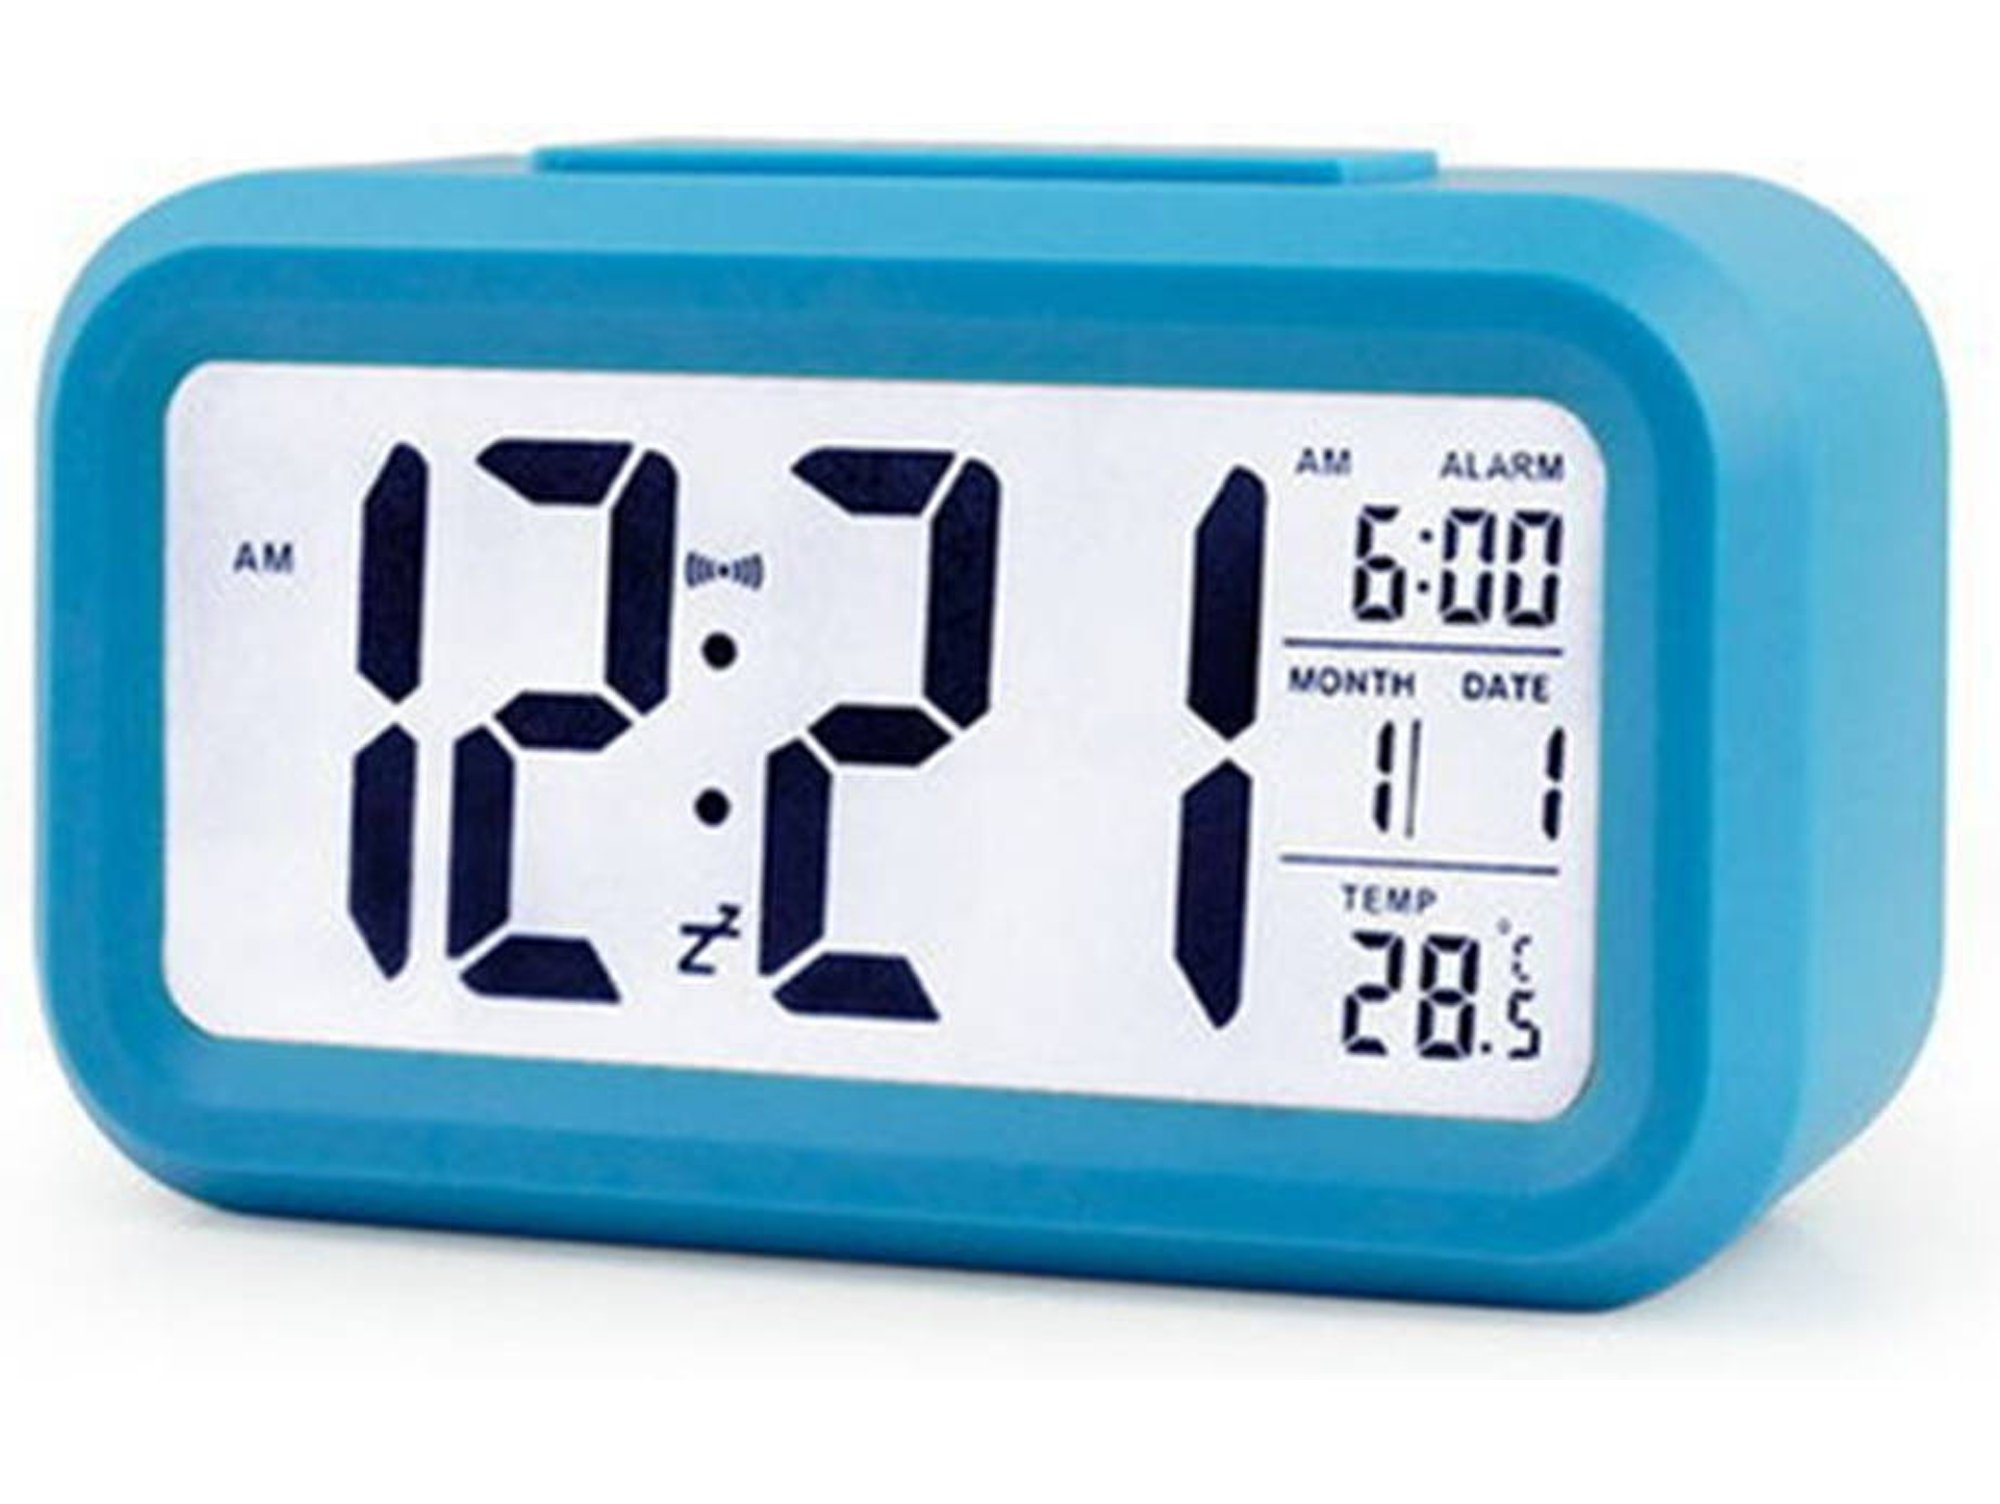 Reloj de Mesa WJS Digital Azul